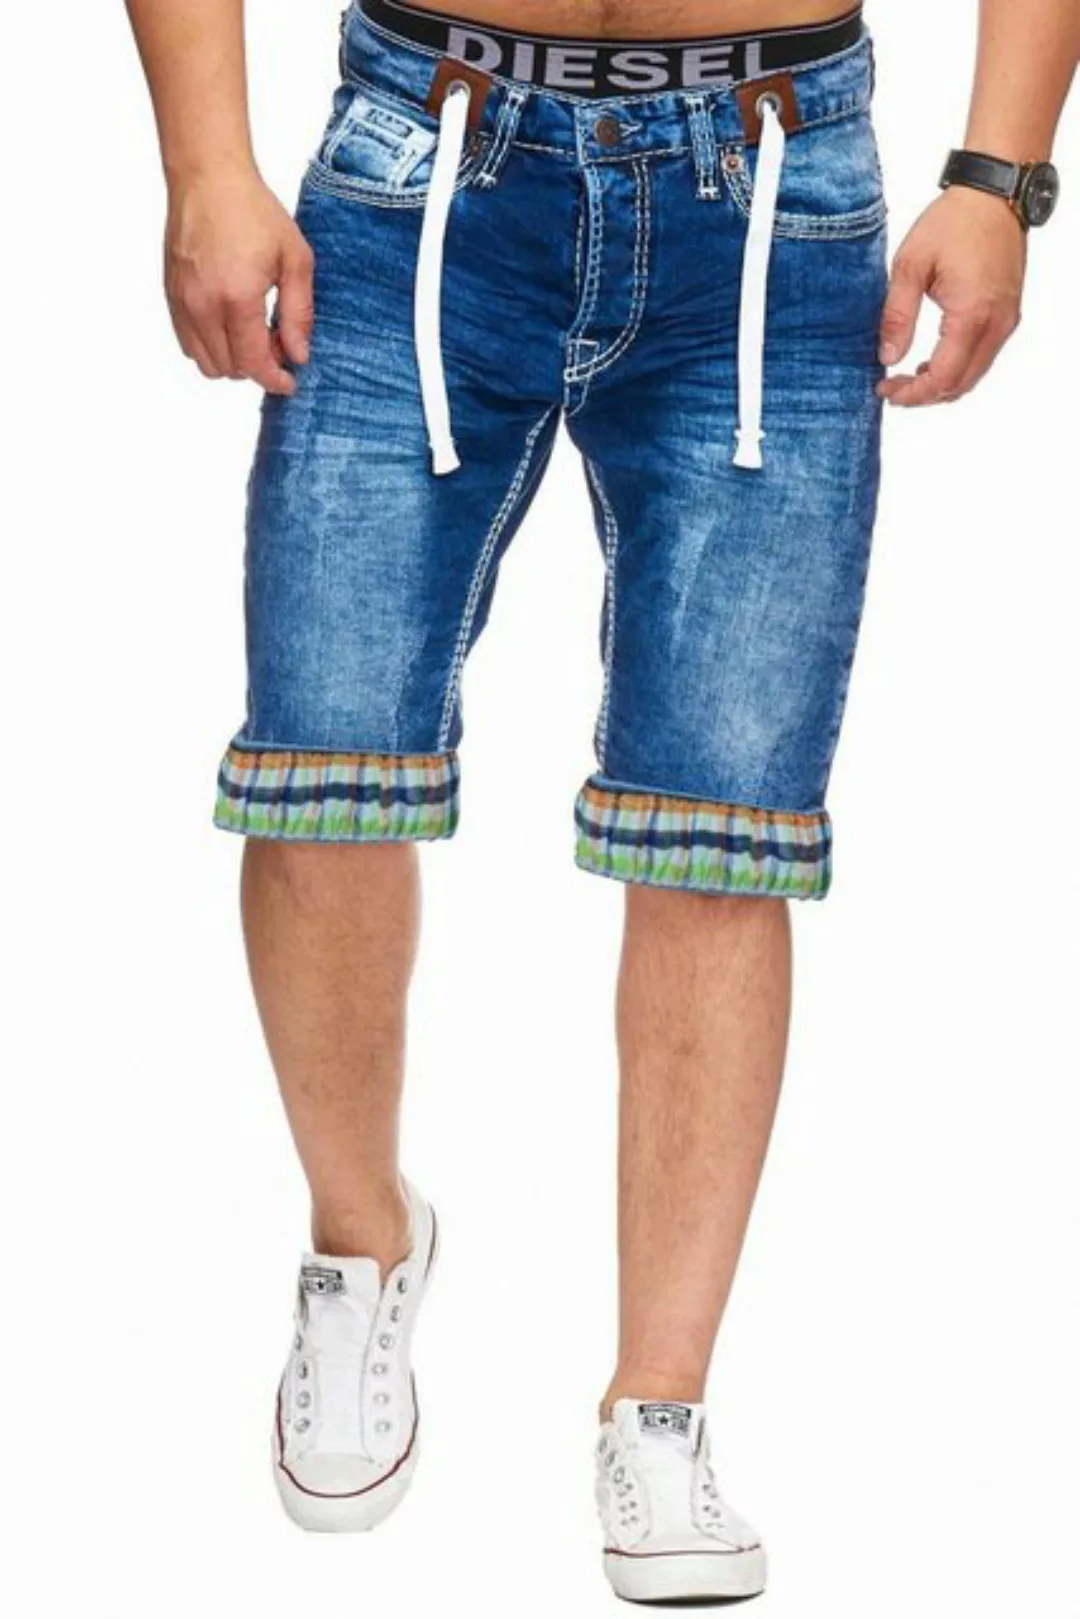 L.gonline Sweatshorts Herren Jeans Shorts, Kurze Hose, Bermuda, Dicke Naht, günstig online kaufen